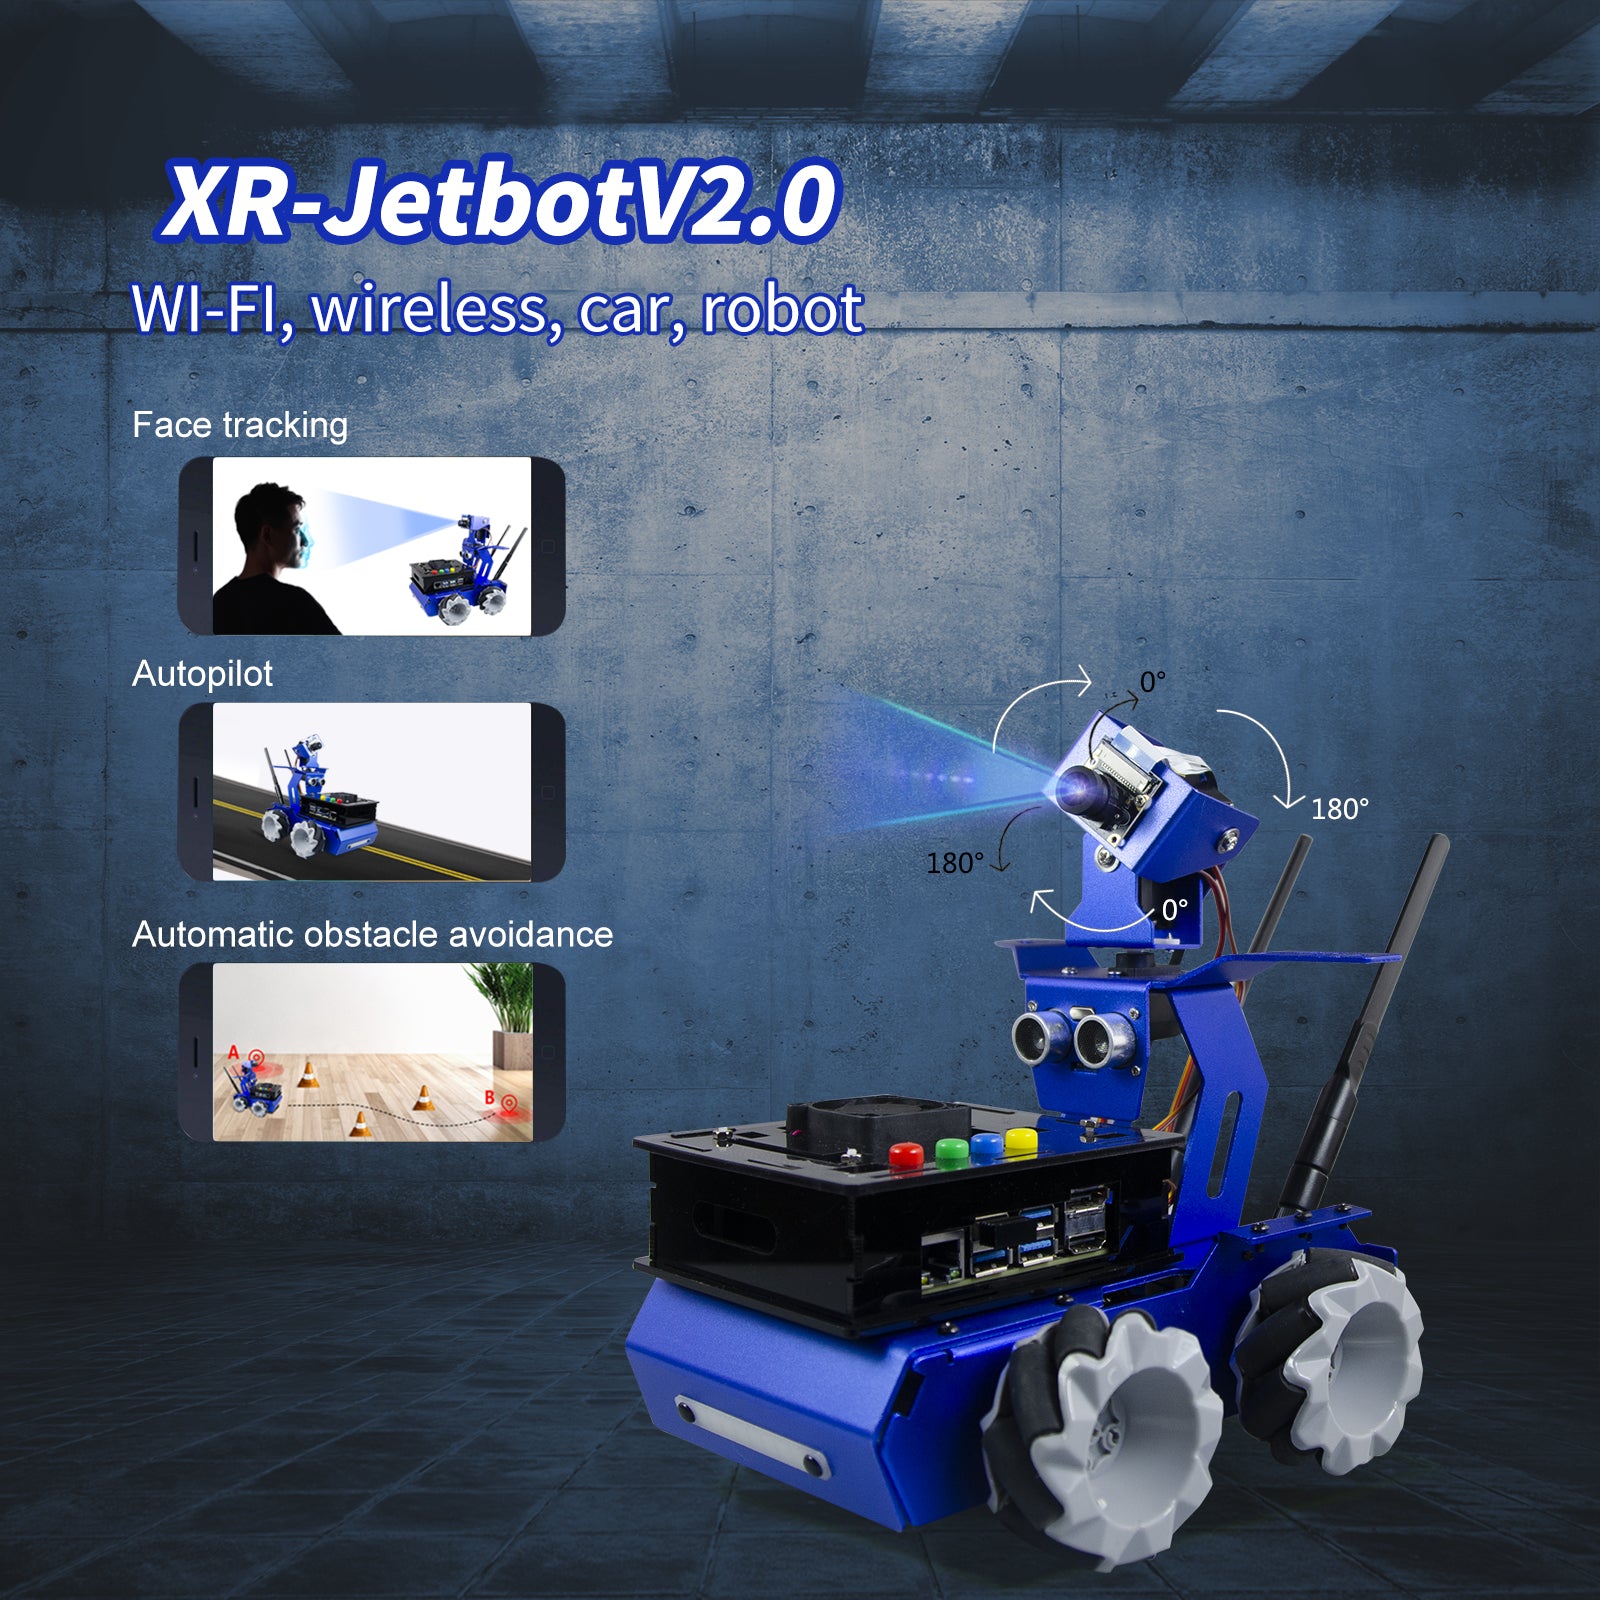 XiaorR Geek Jetson Nano Jetbot 2.0 wireless Mecanum wheeled smart robot car has AI visual recognition function